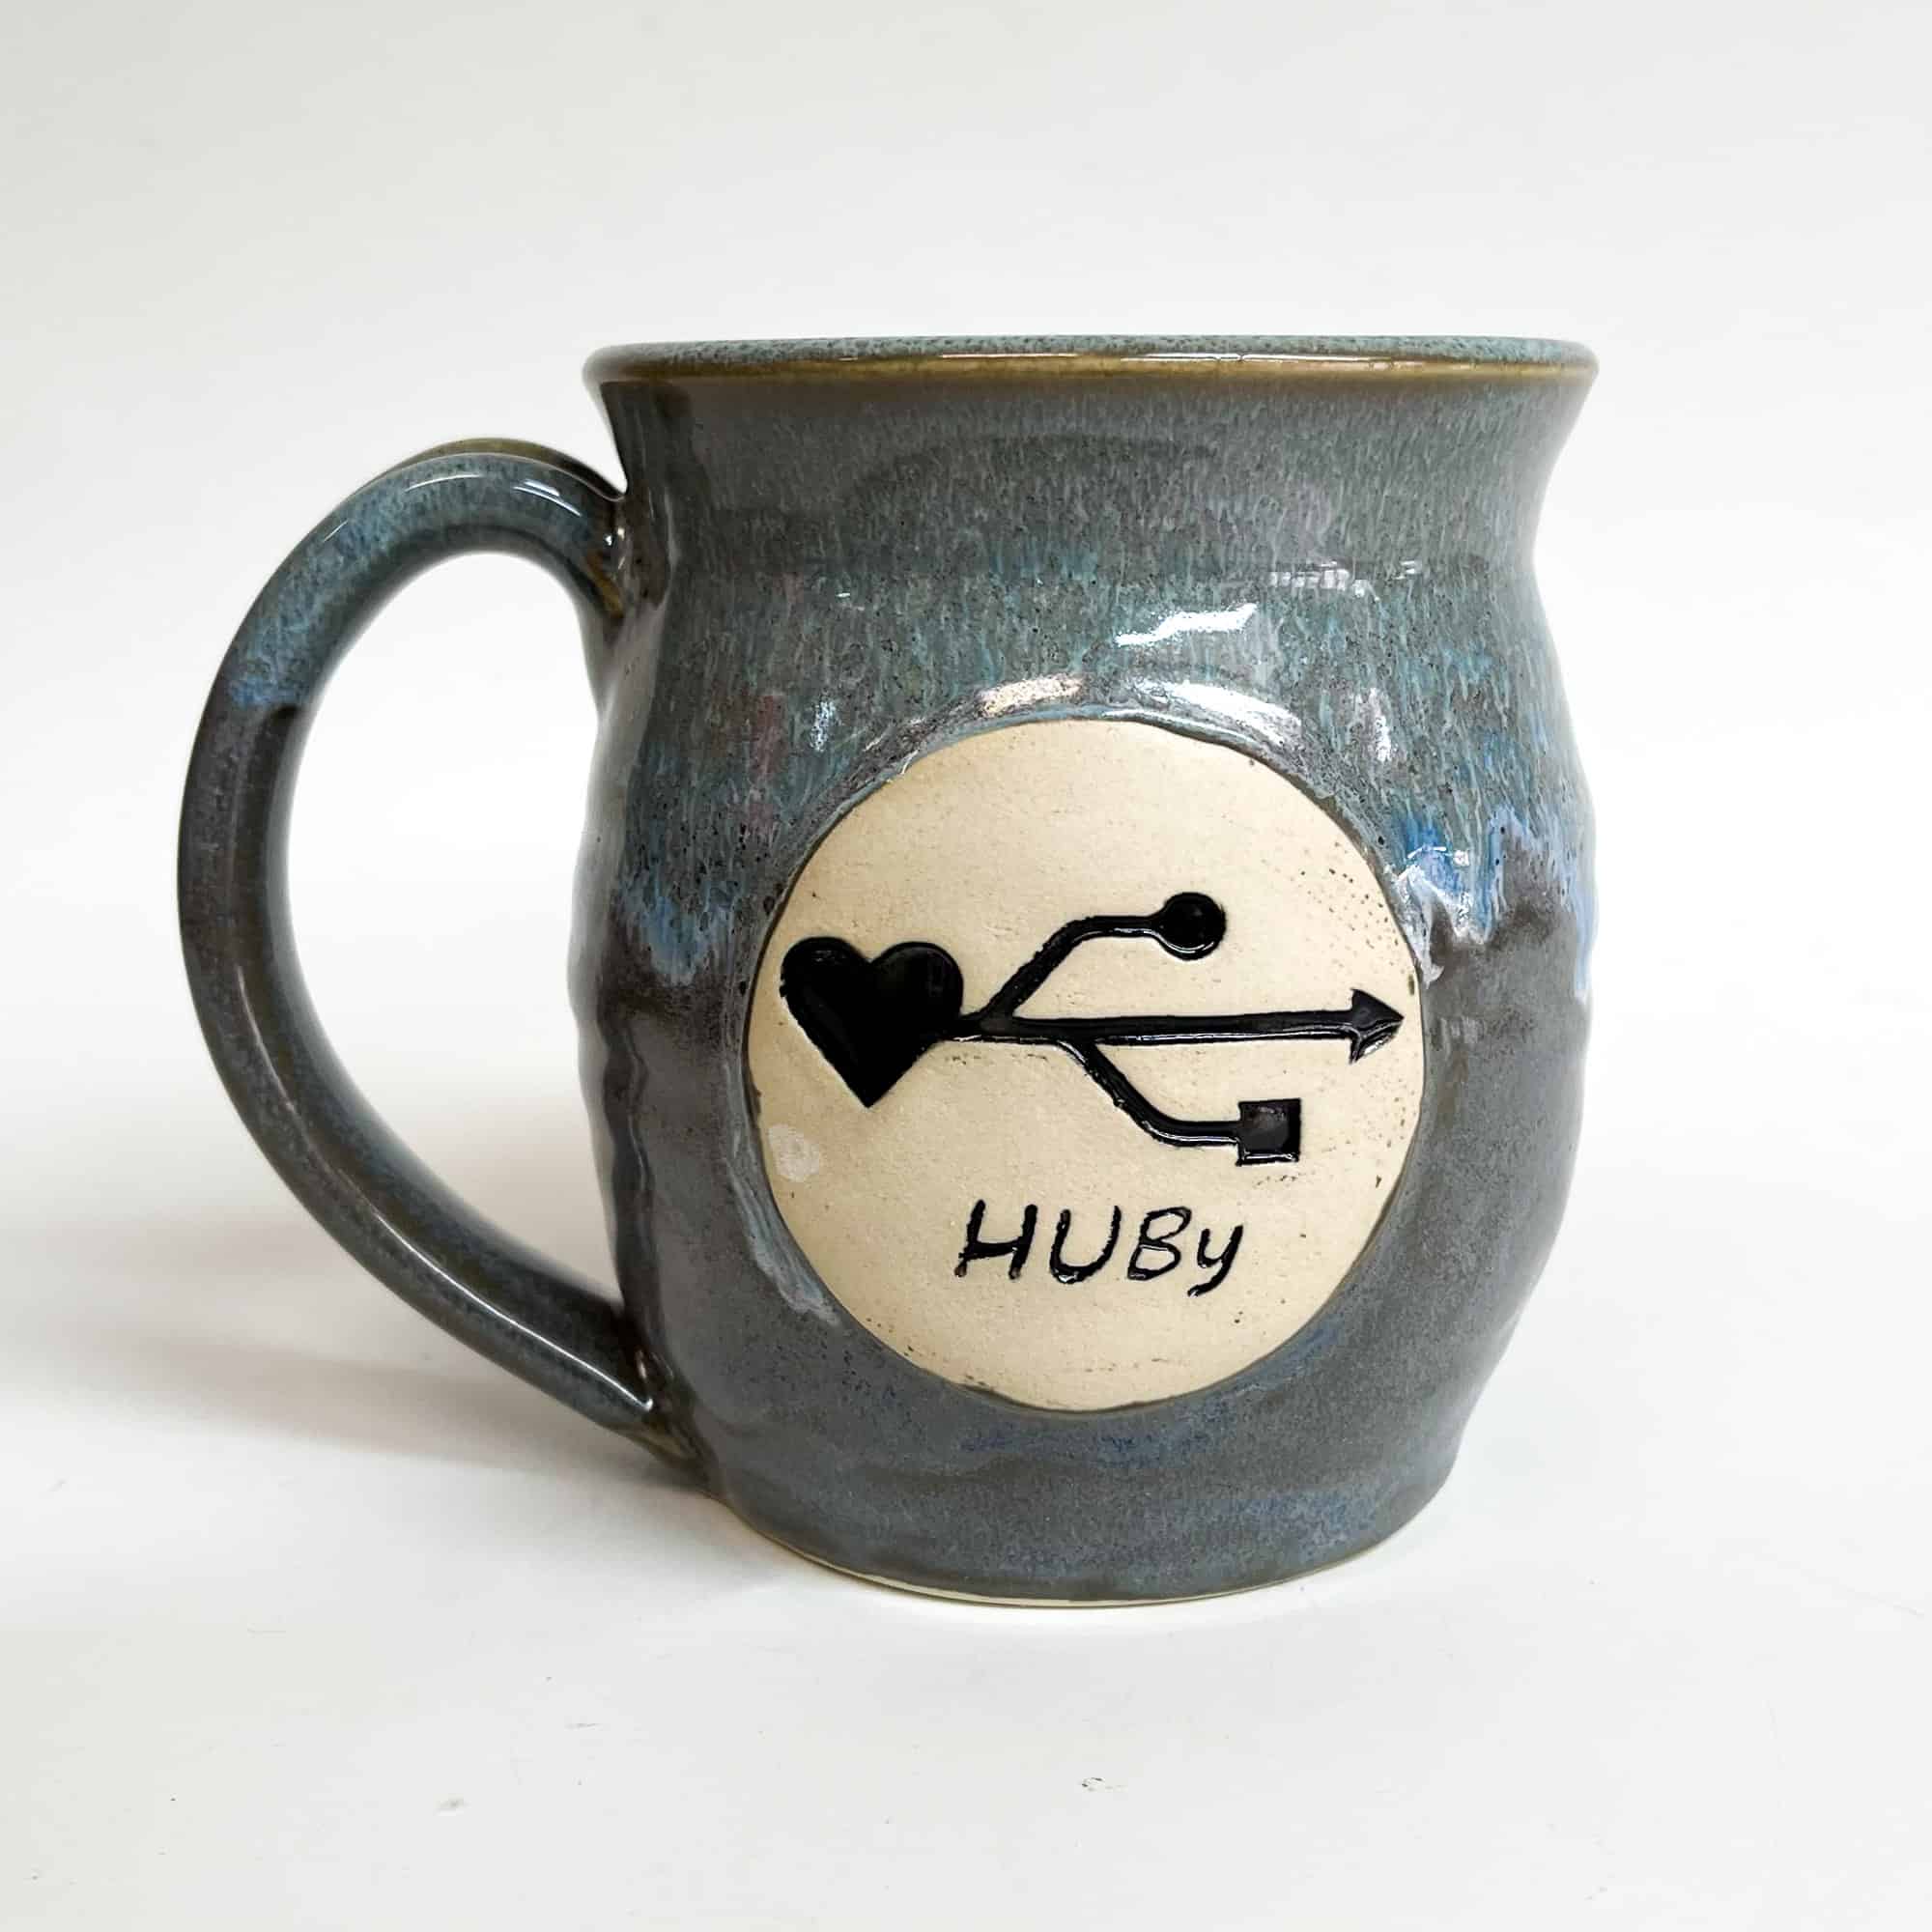 200 Mug aesthetic ideas  mugs, coffee mugs, cups and mugs